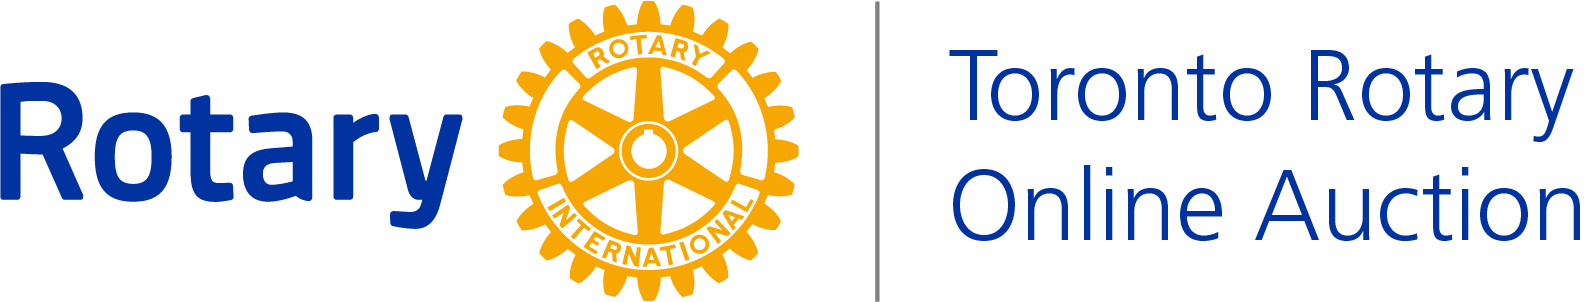 The Rotary Club of East York logo